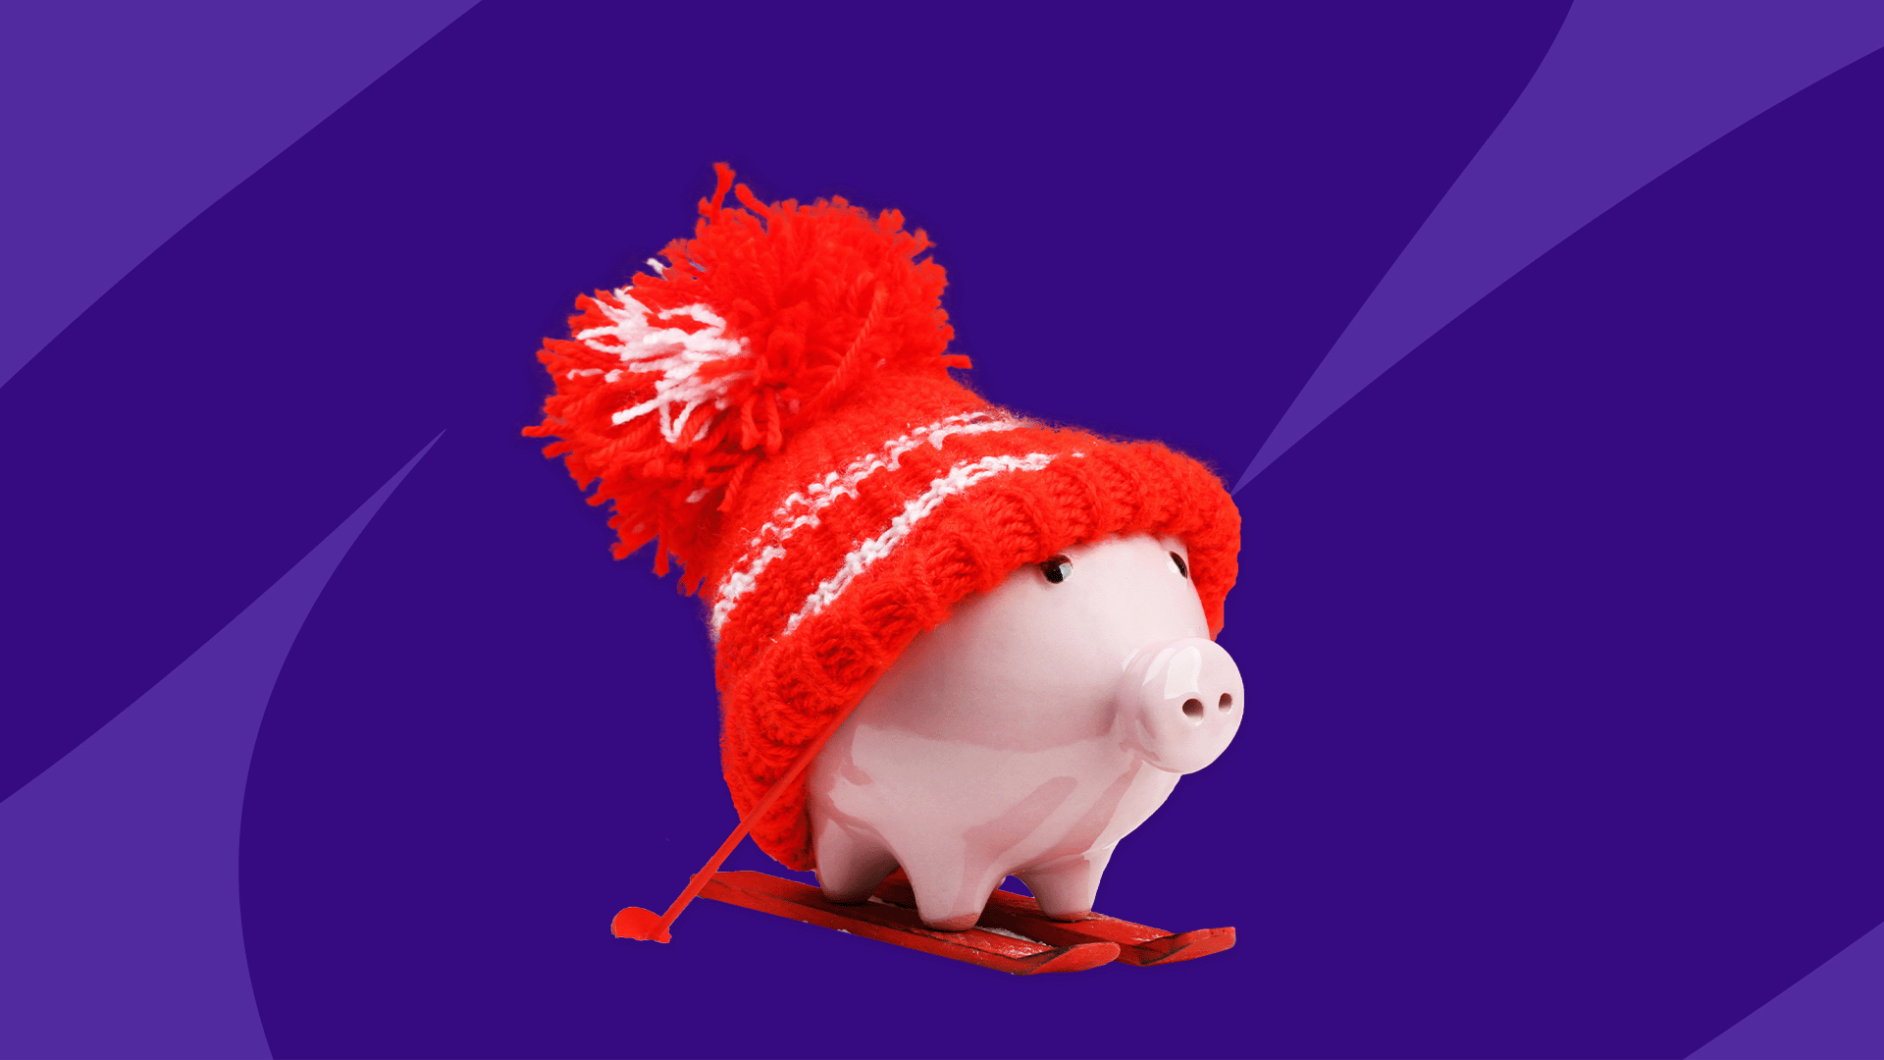 piggy bank wearing a knit hat - SingleCare reviews